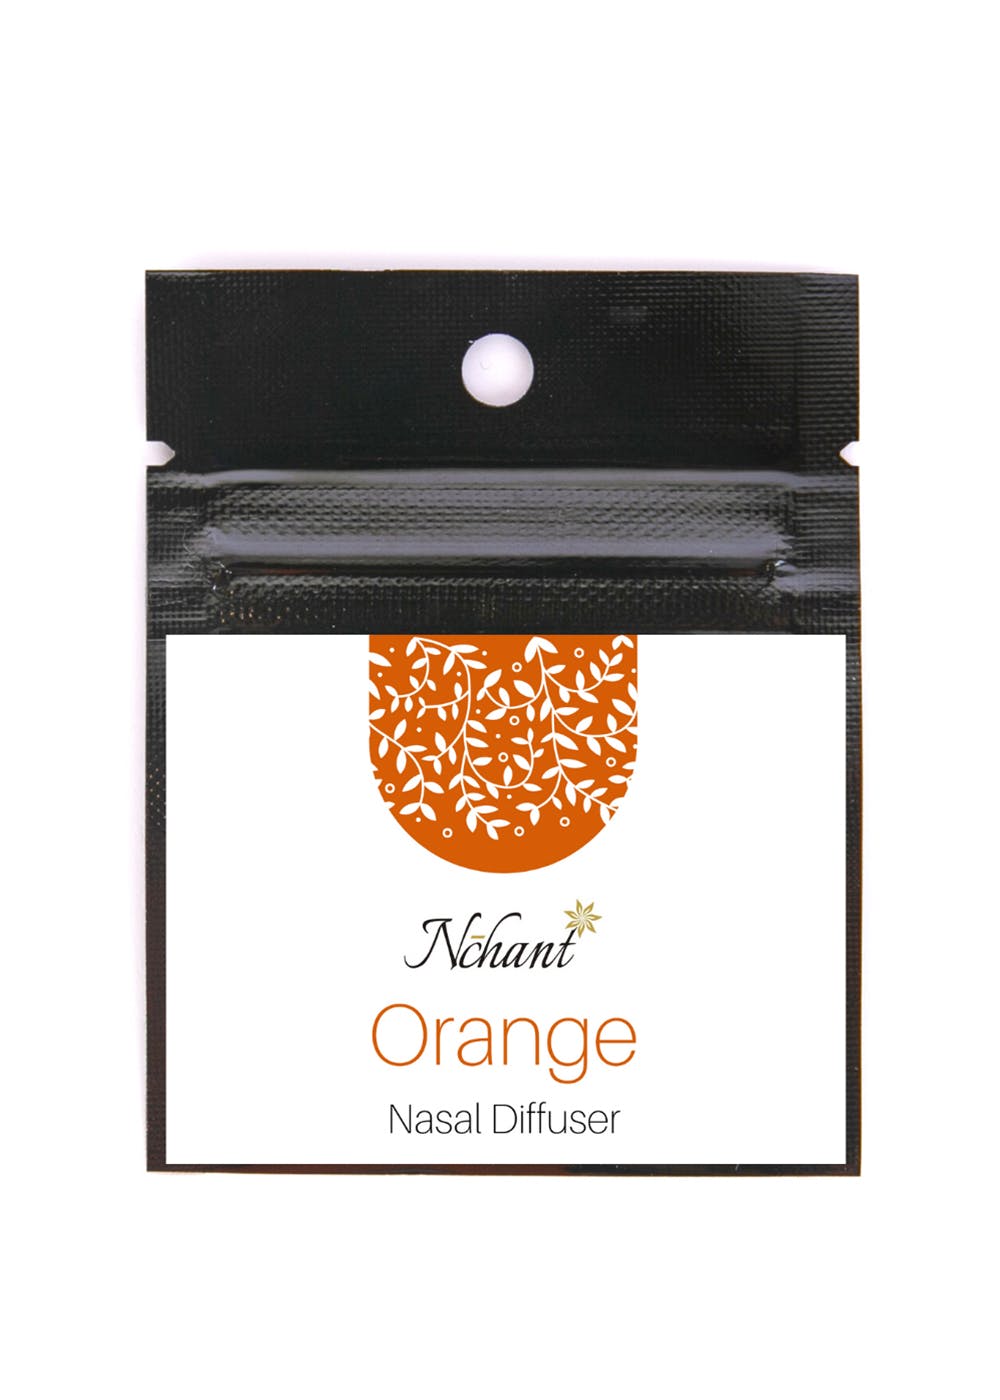 Orange Nasal Diffuser